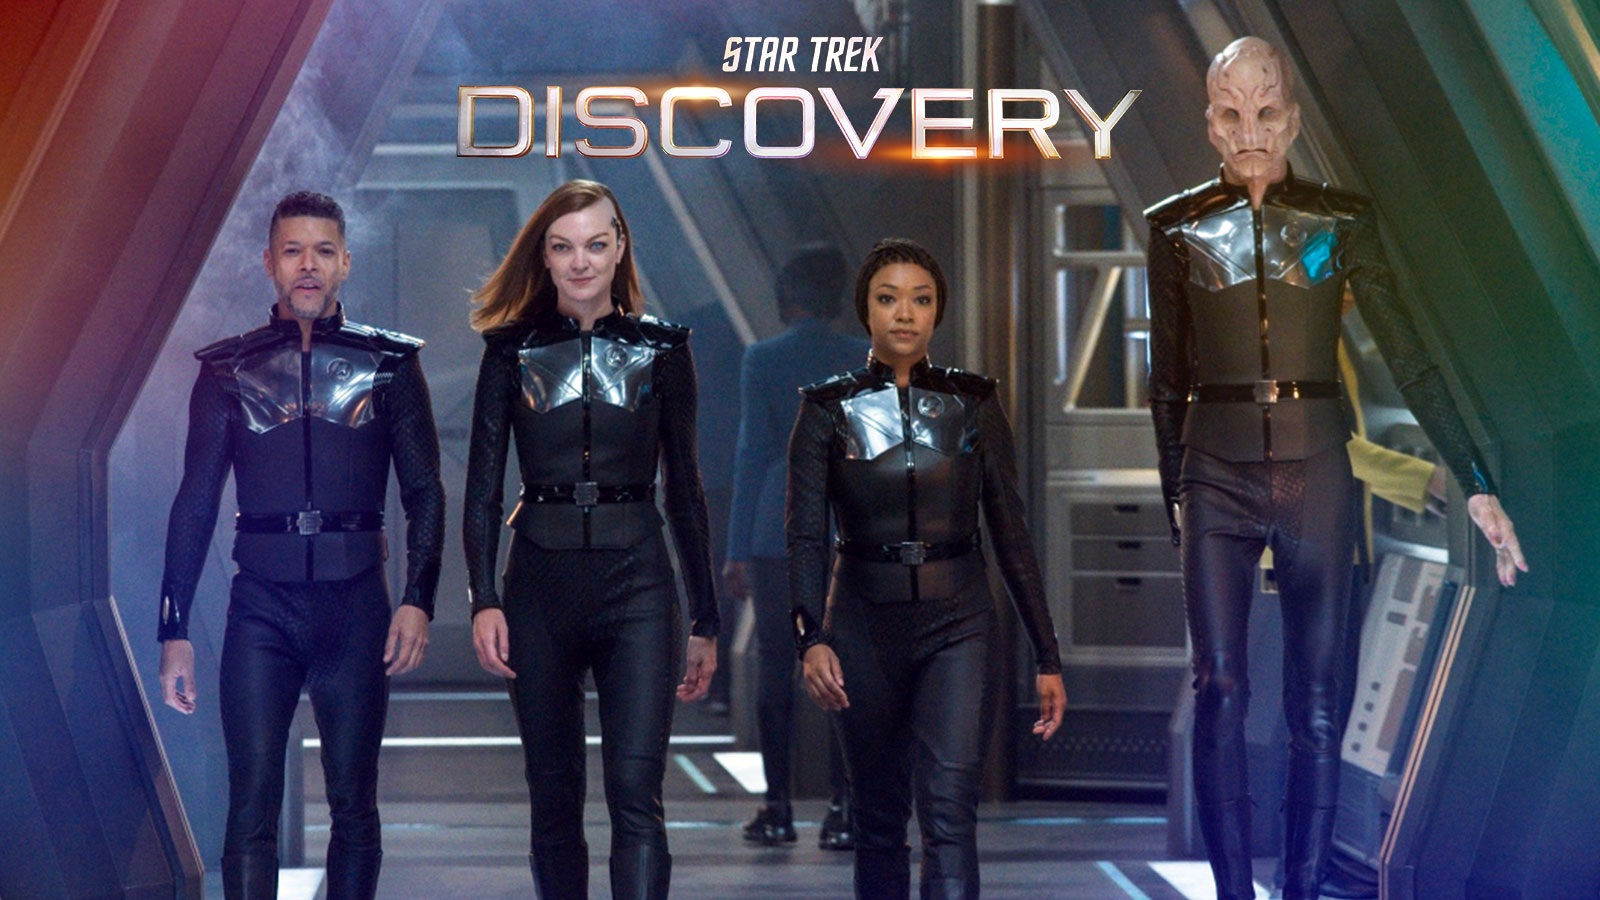 Star Trek: Discovery Episode 411 “Rosetta” Preview + New Photos